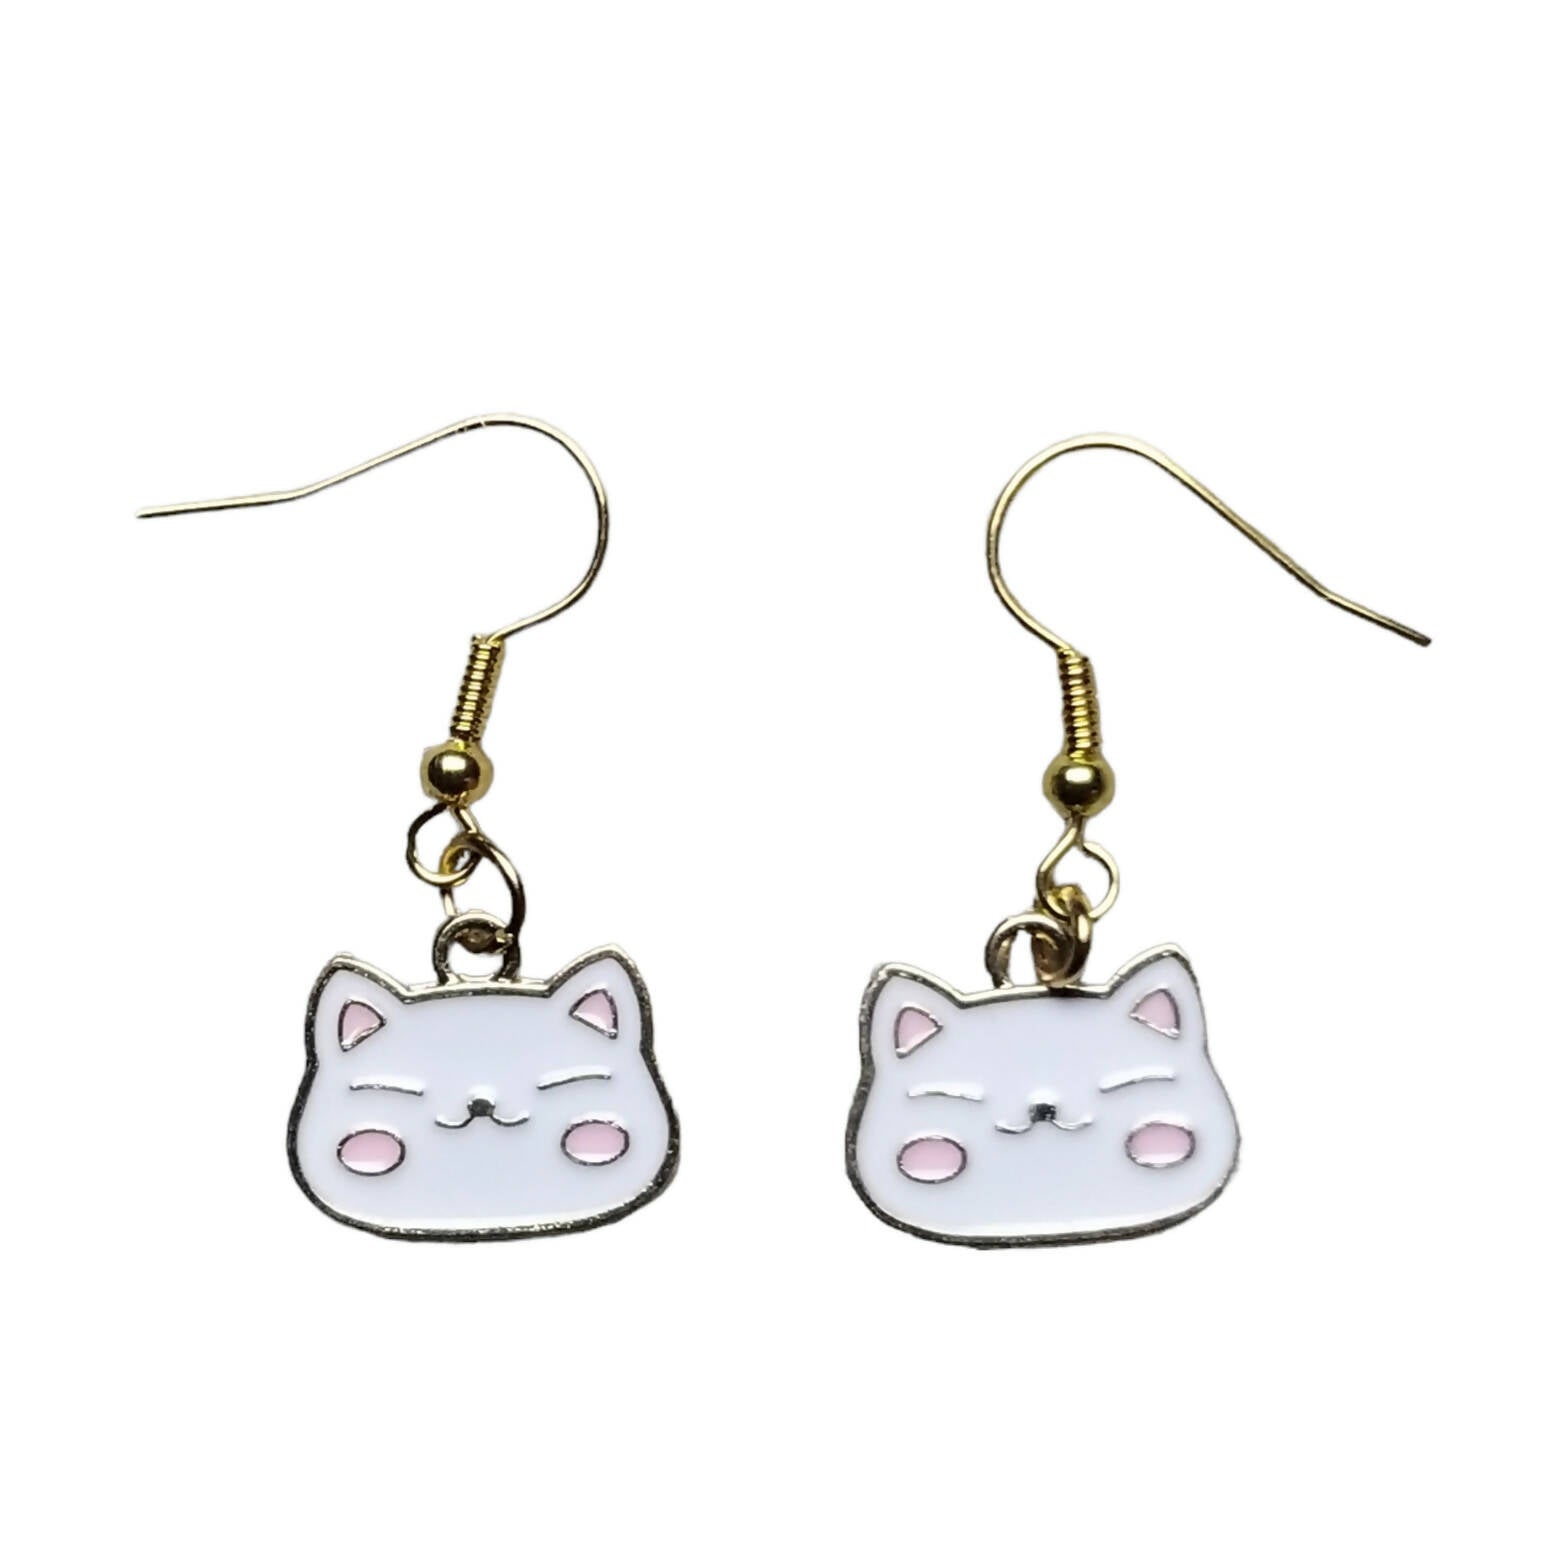 Smiling cat earrings